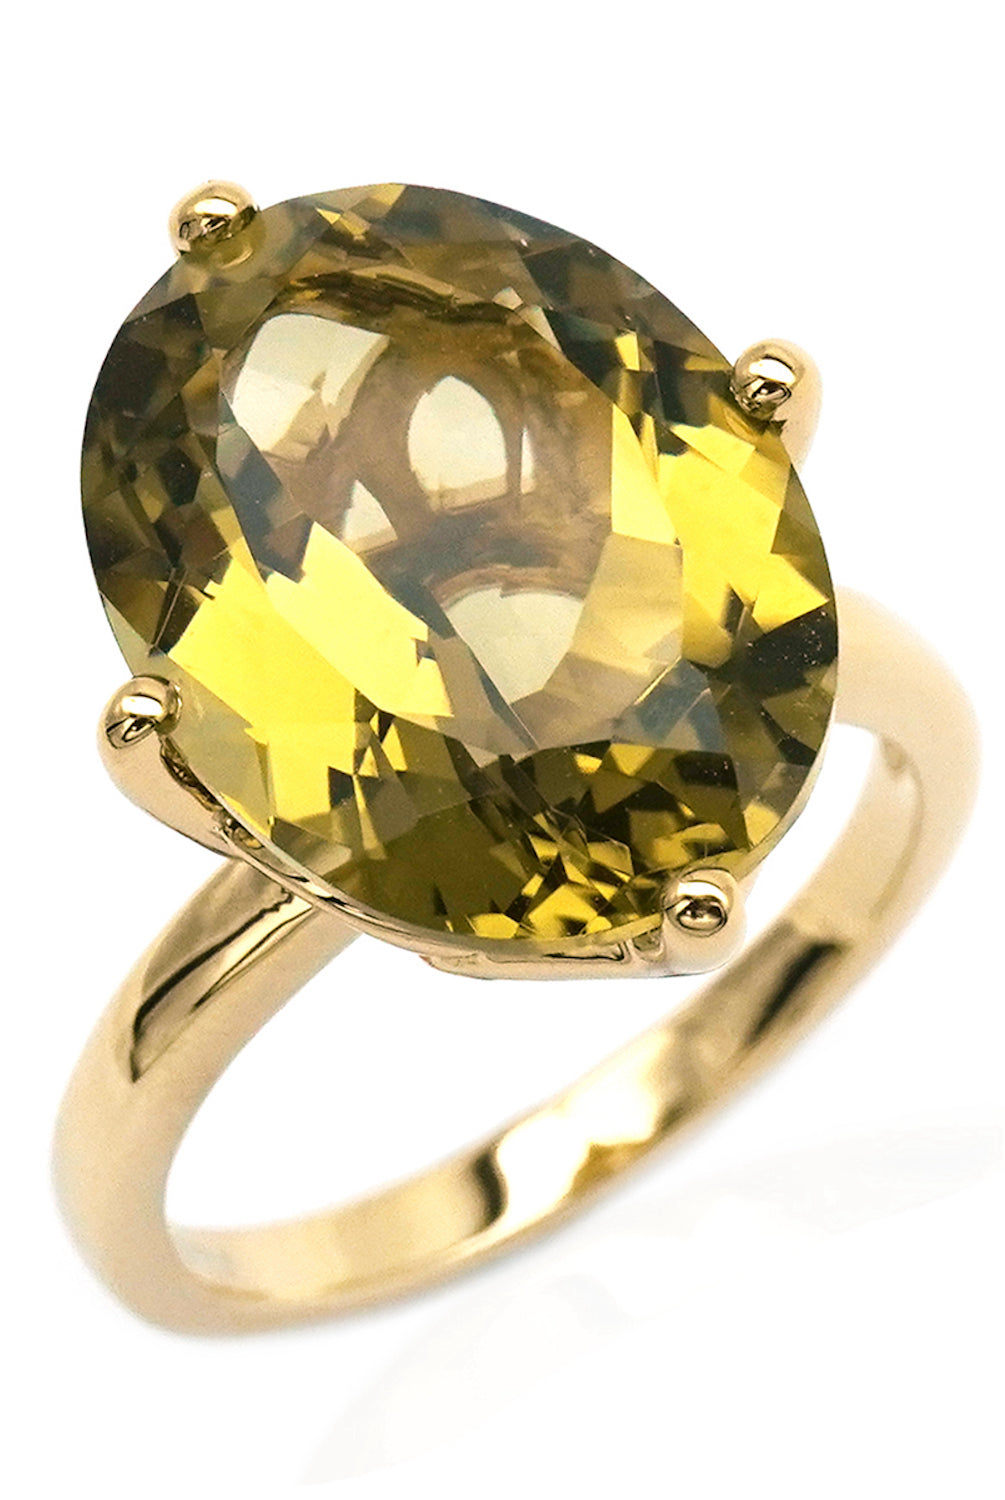 Oval cut olive quartz gemstone ring.